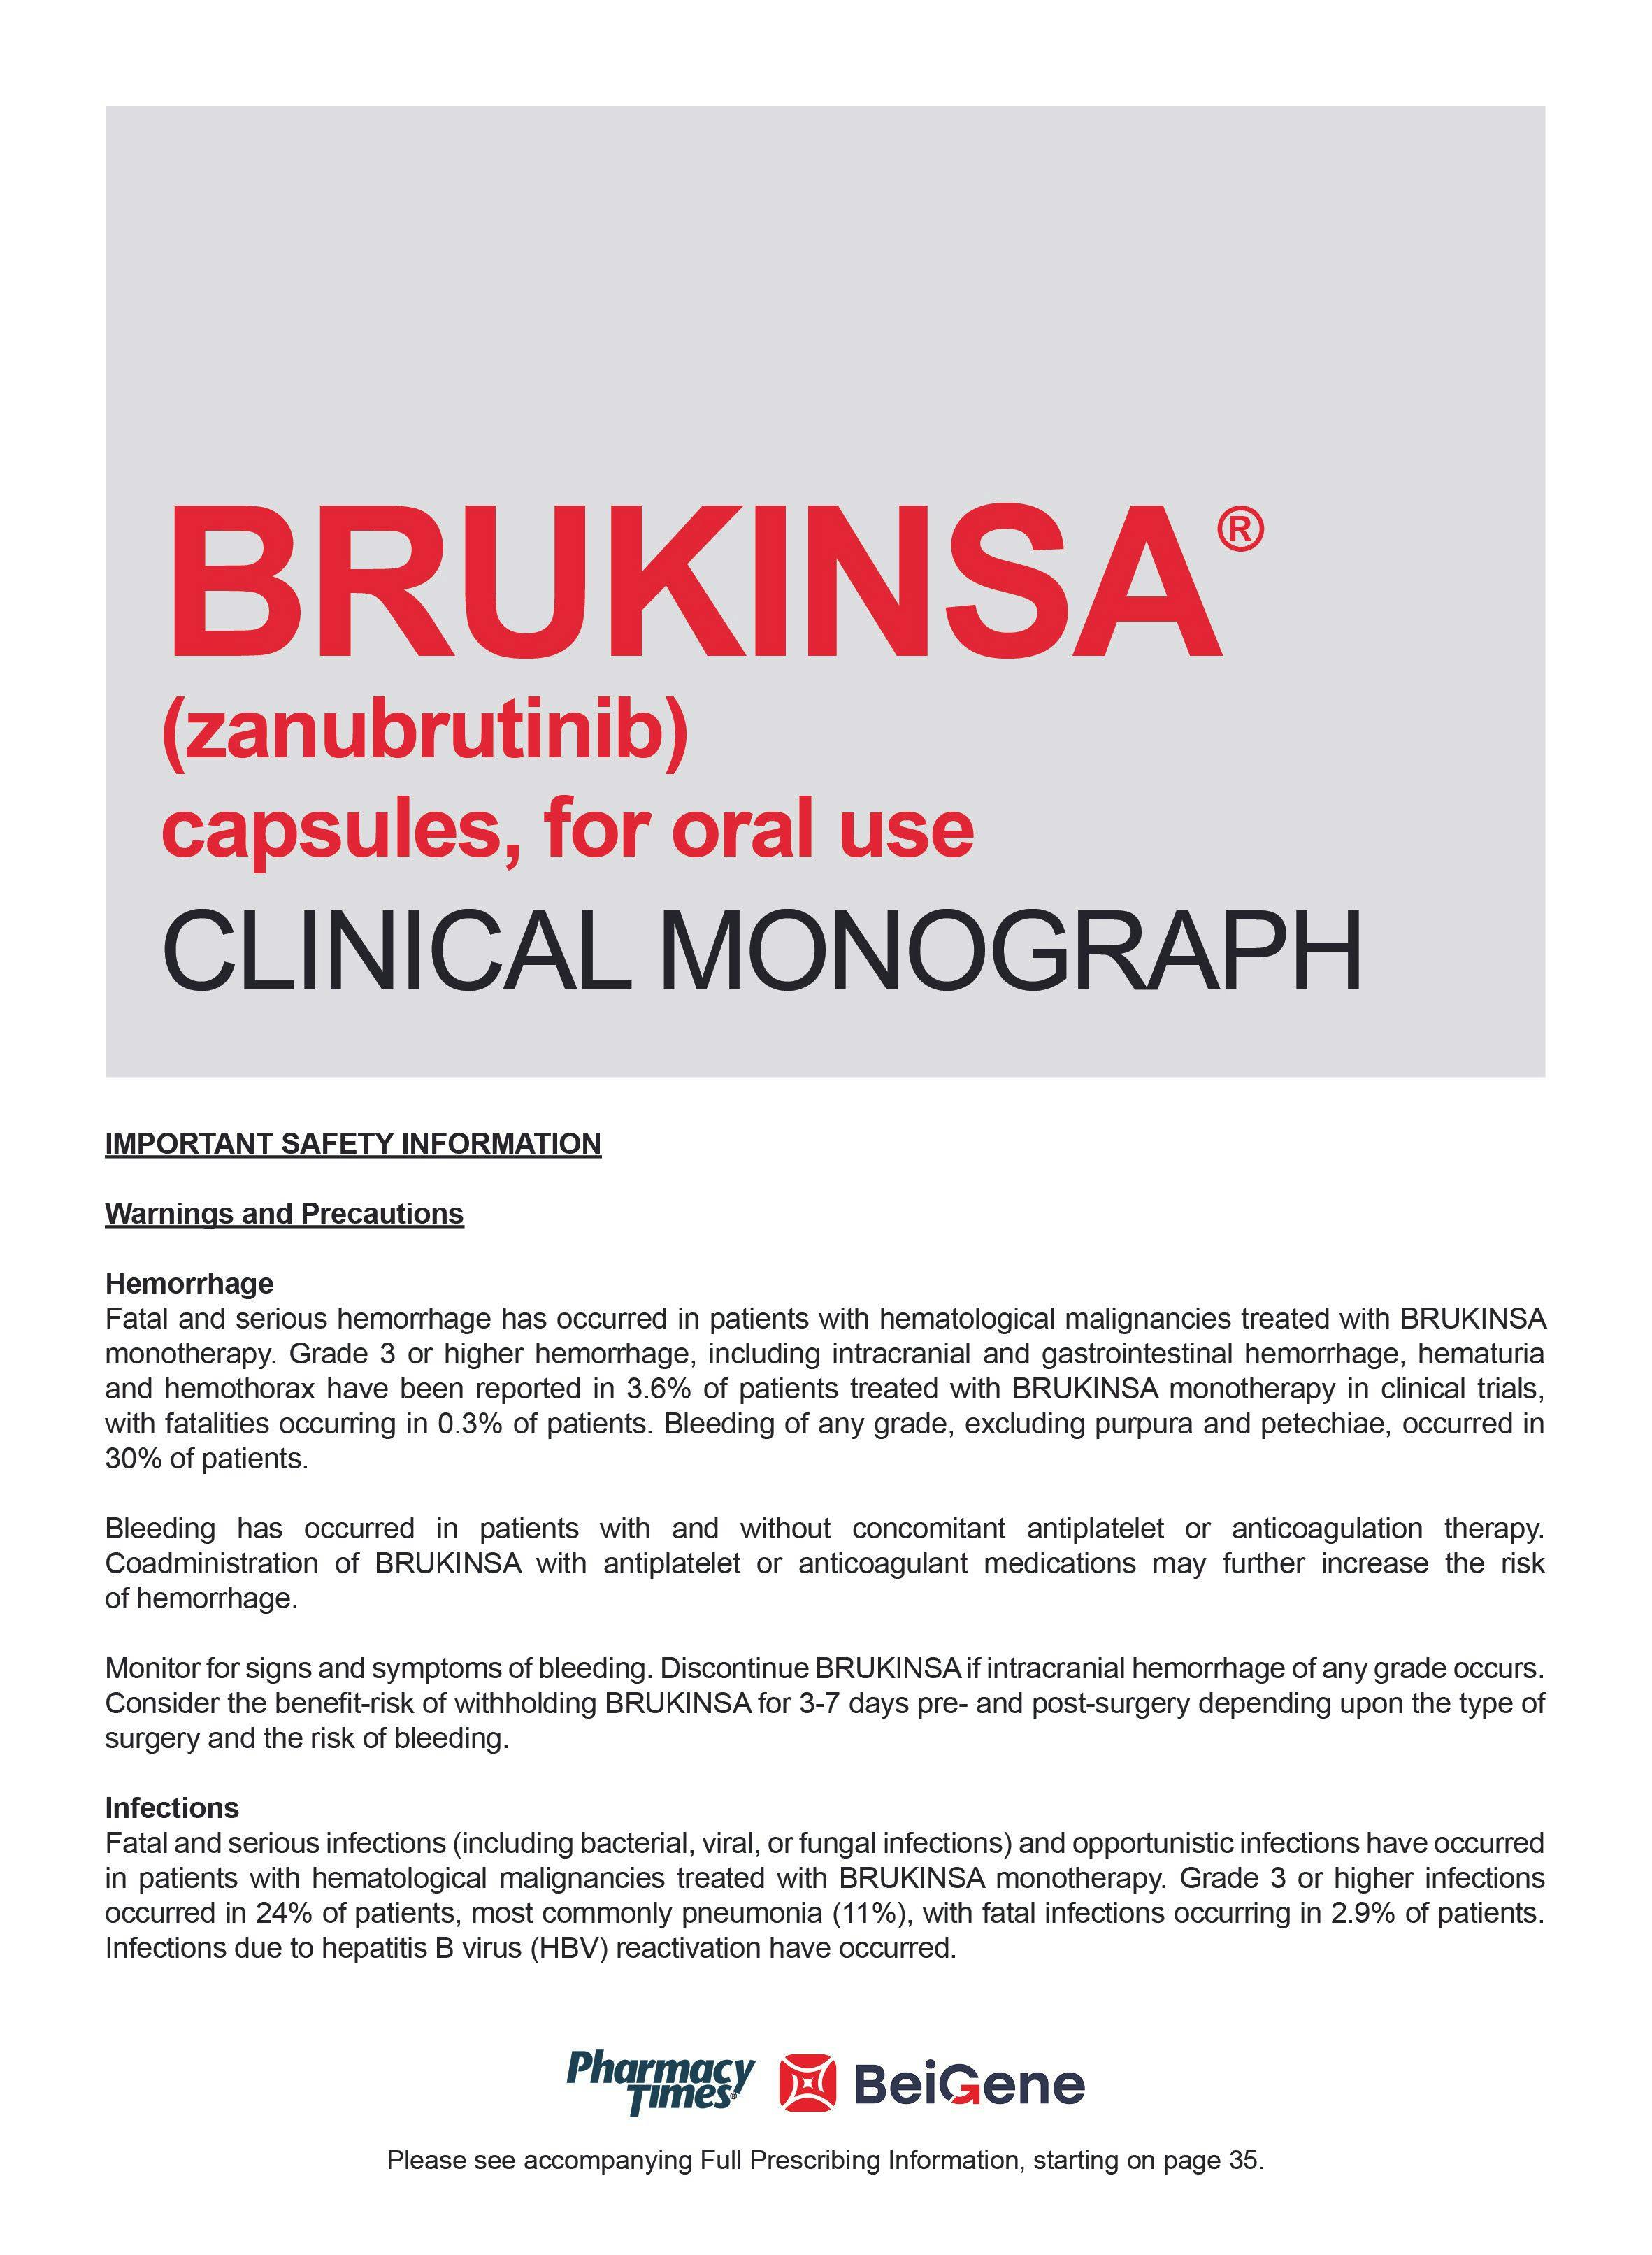 BRUKINSA® (zanubrutinib) capsules, for oral use: Clinical Monograph